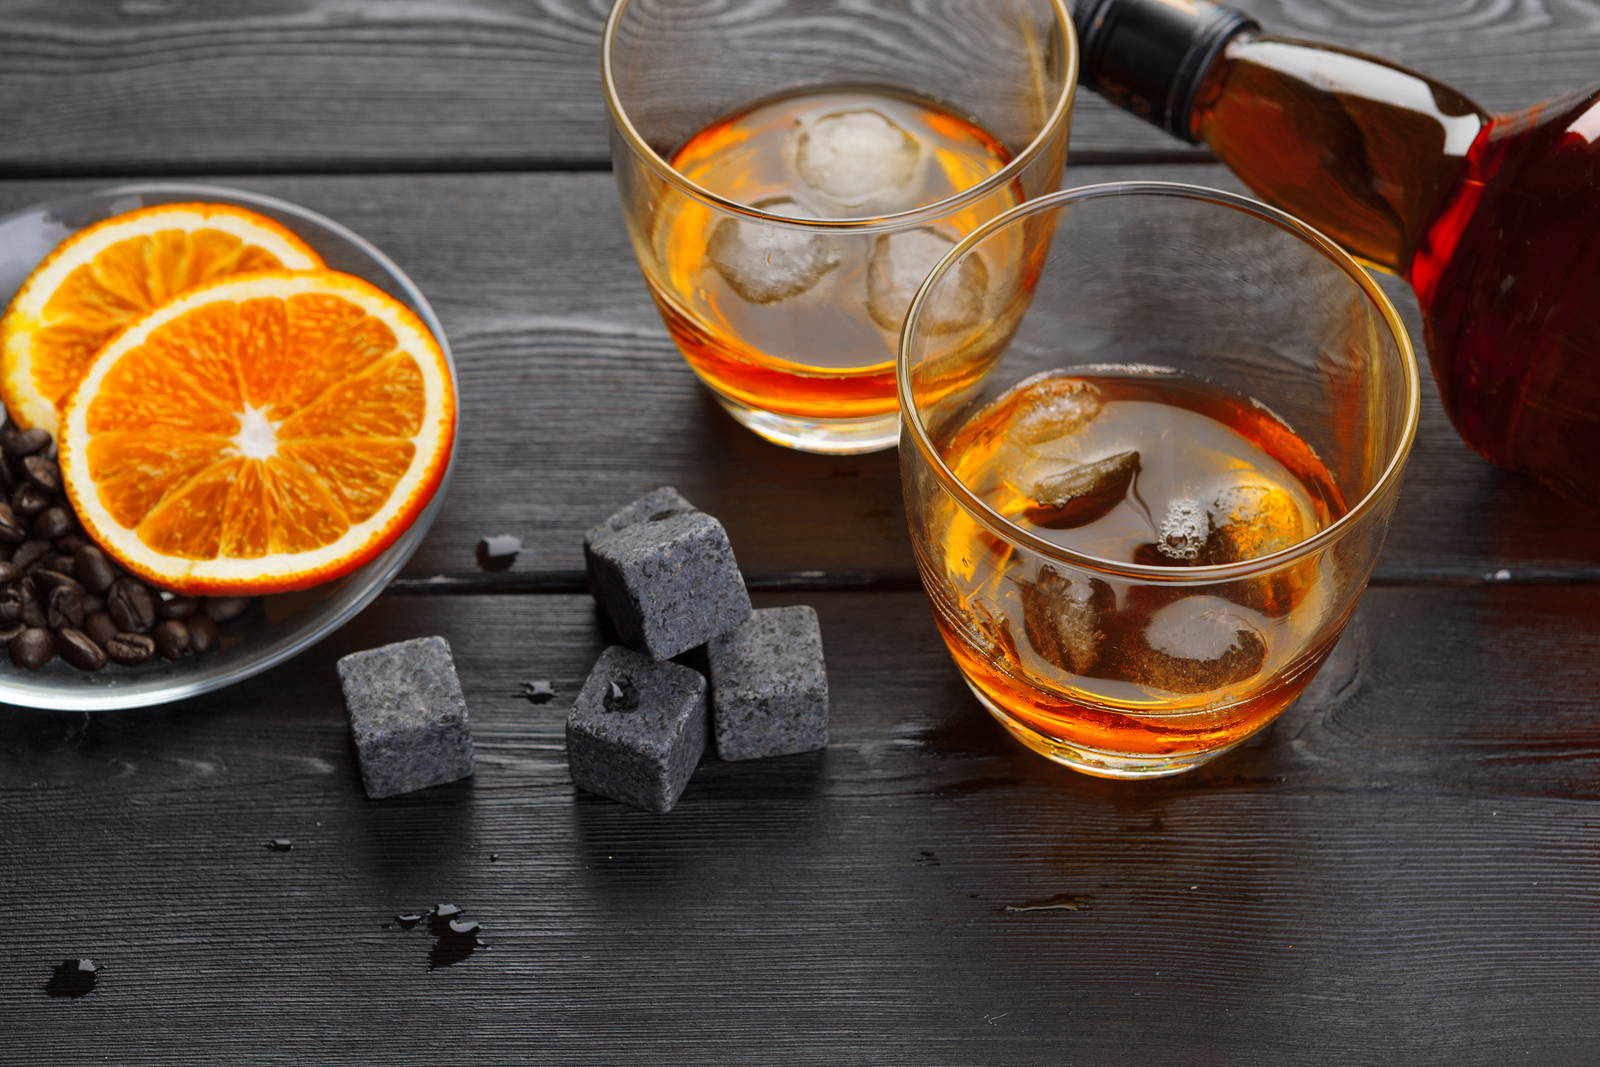 Whisky glasses with orange slices